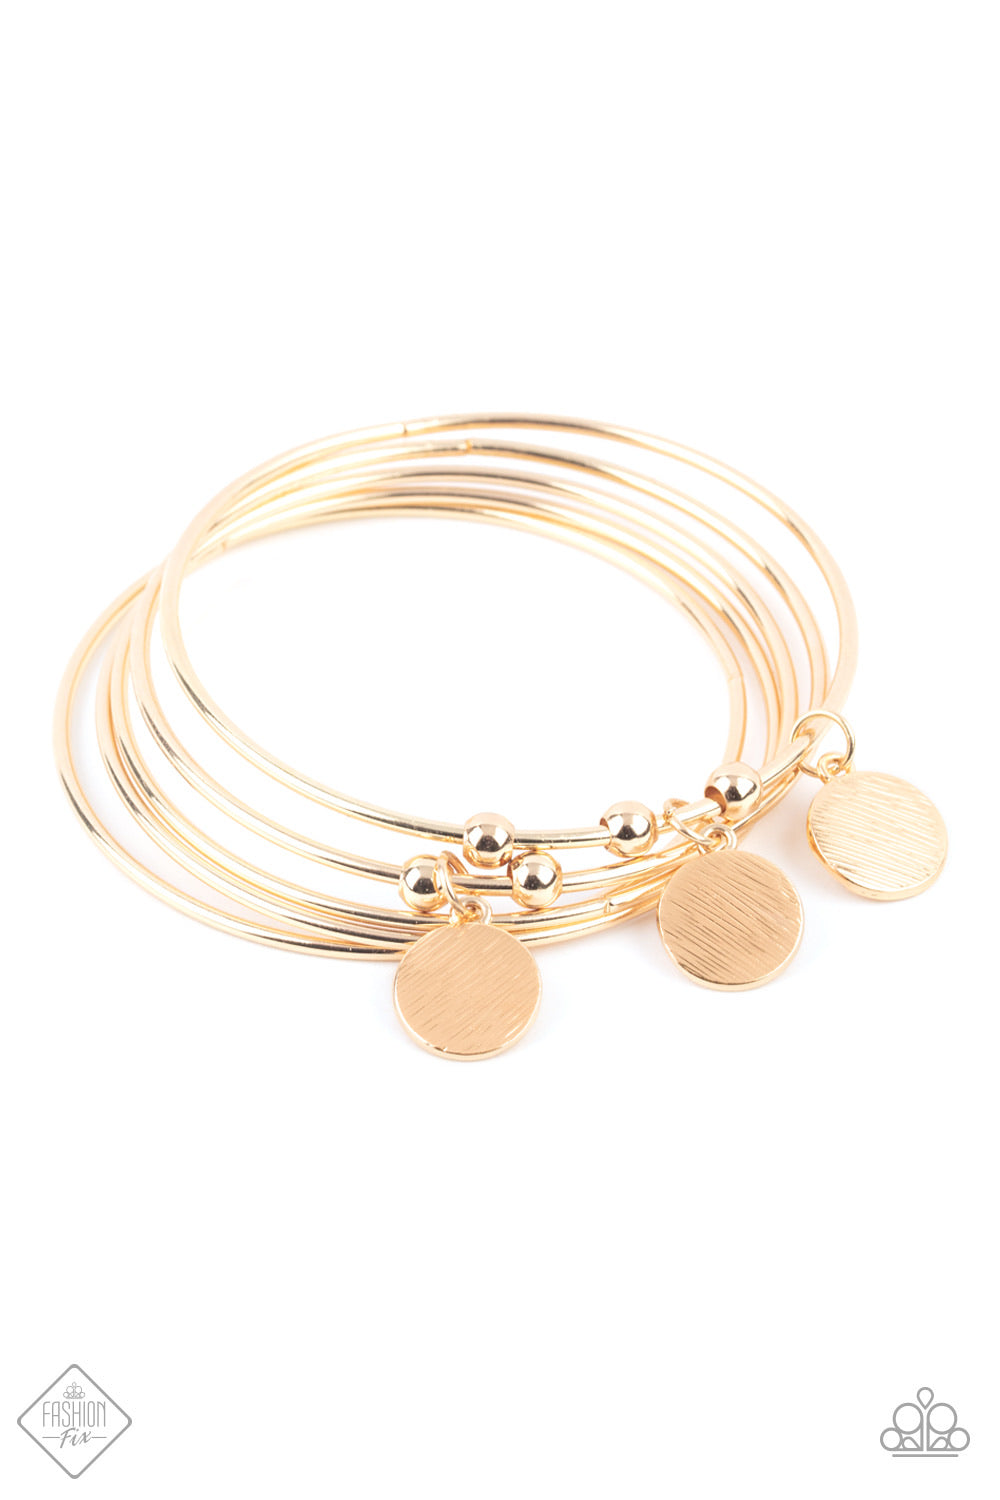 Paparazzi Bracelets - Reflective Radiance - Gold (May 2020 Fashion Fix Sunset Sightings) - SHOPBLINGINGPRETTY